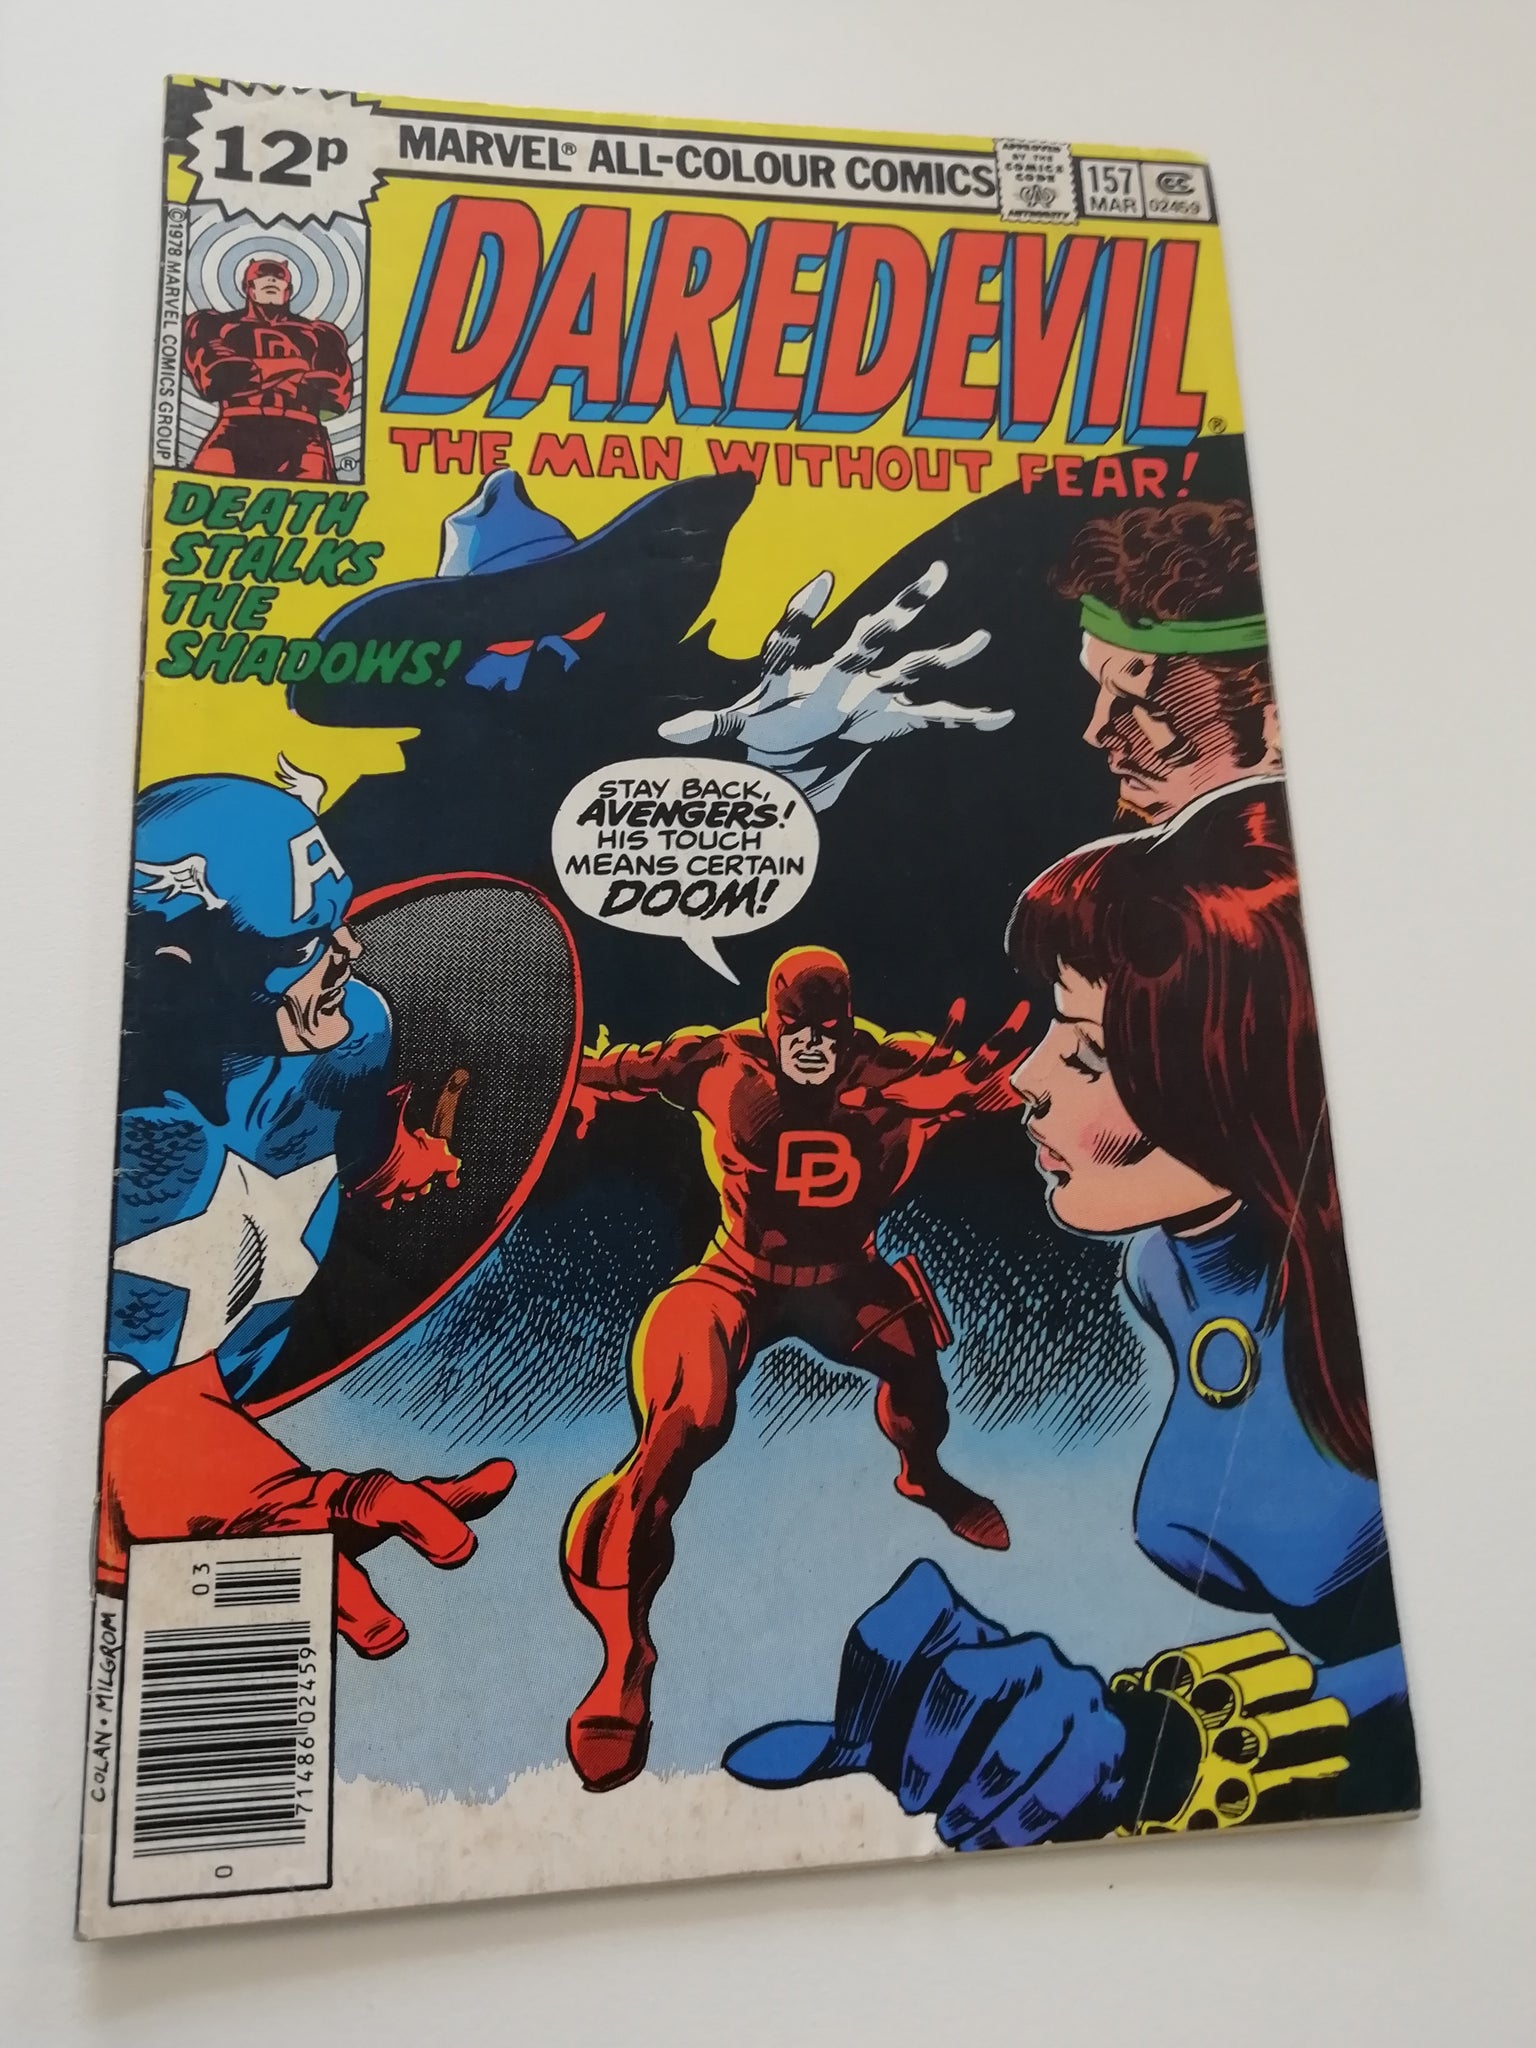 Daredevil #157 FN- (Pence edition)